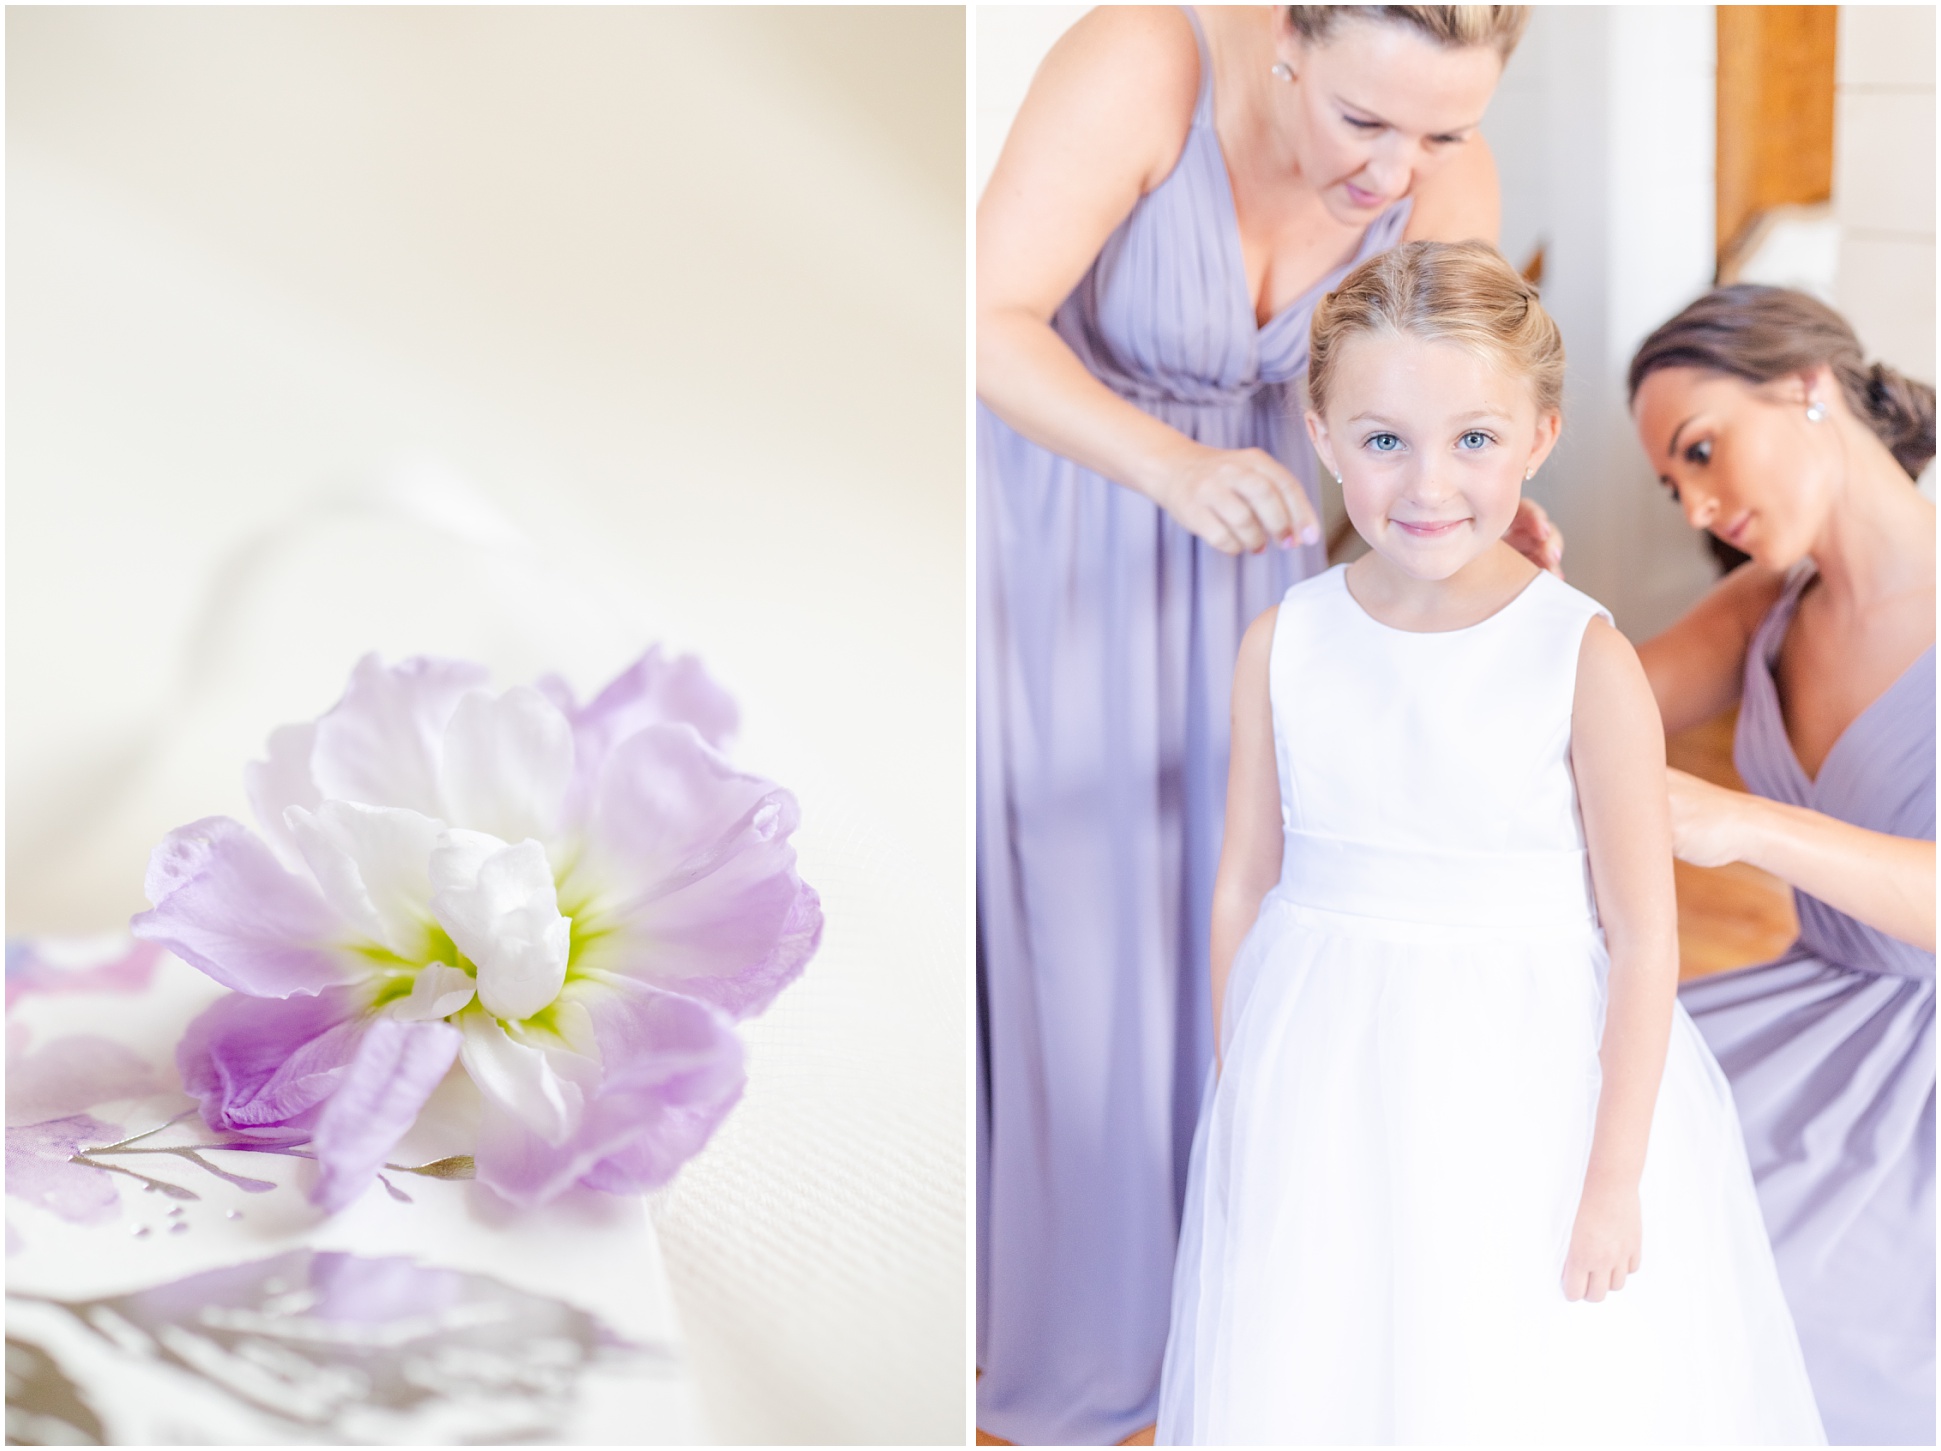 Left: purple flower, Right: Flower girl getting ready for wedding day